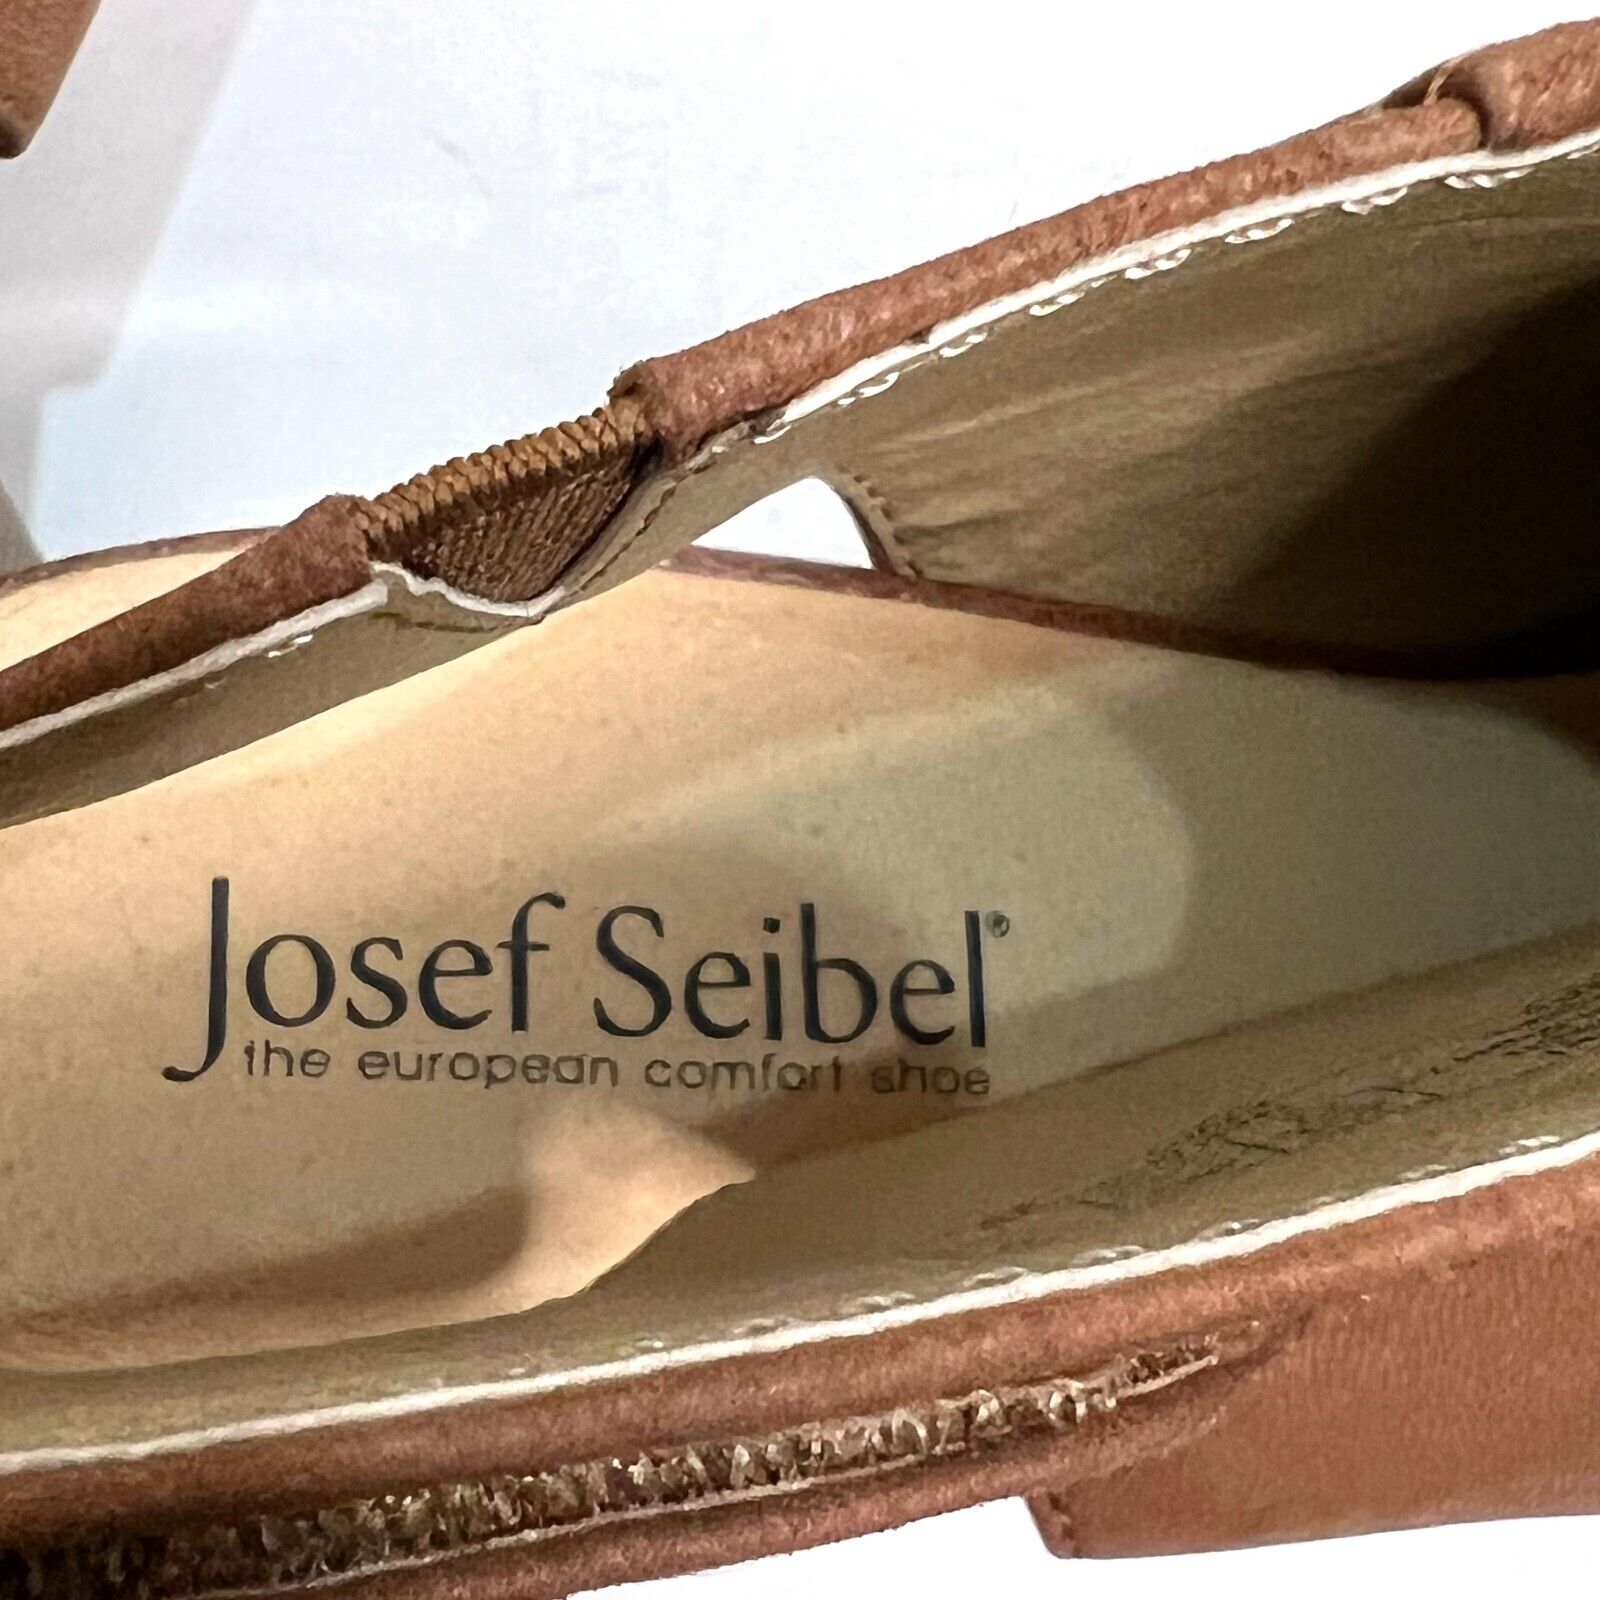 Josef Seibel Bonnie Leather Open Toe Ankle Boot Bootie Block Heel Sandal Size 40